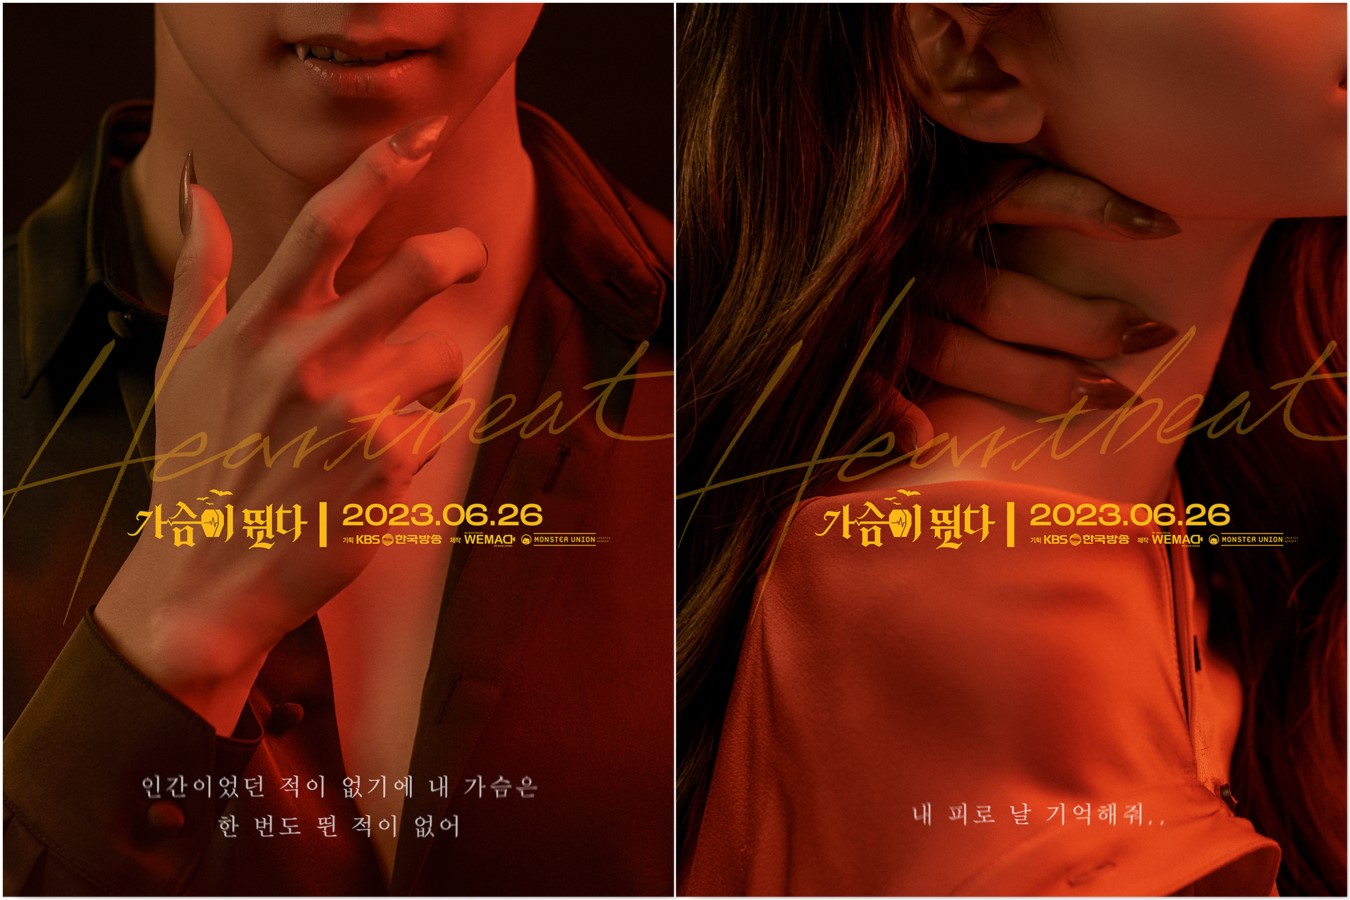 Taecyeon and Won Ji-ahn bare their necks for KBS’s Heartbeat